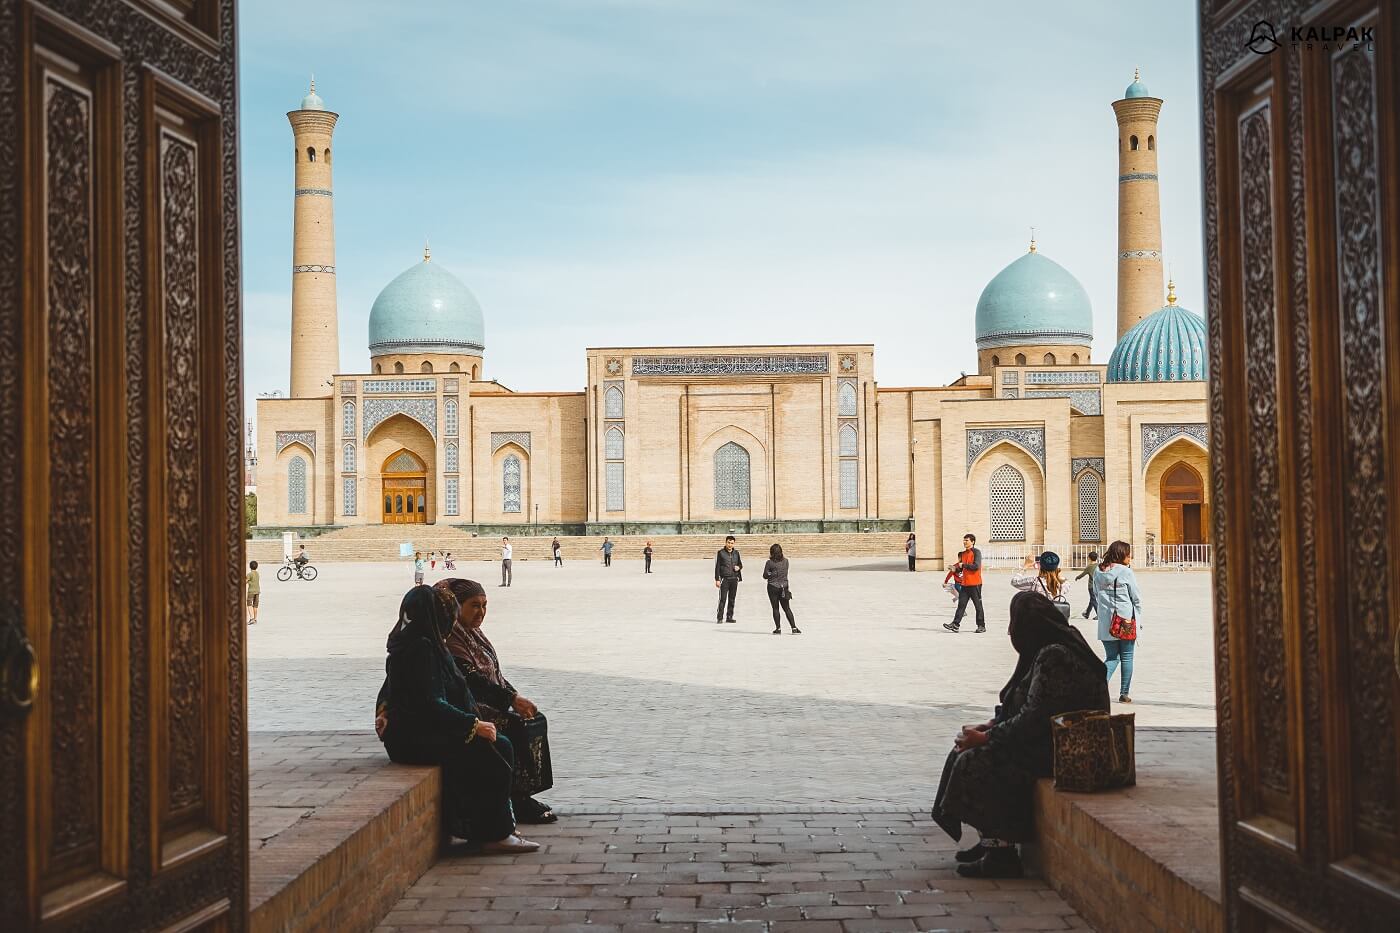 Khast Imam complex in Tashkent